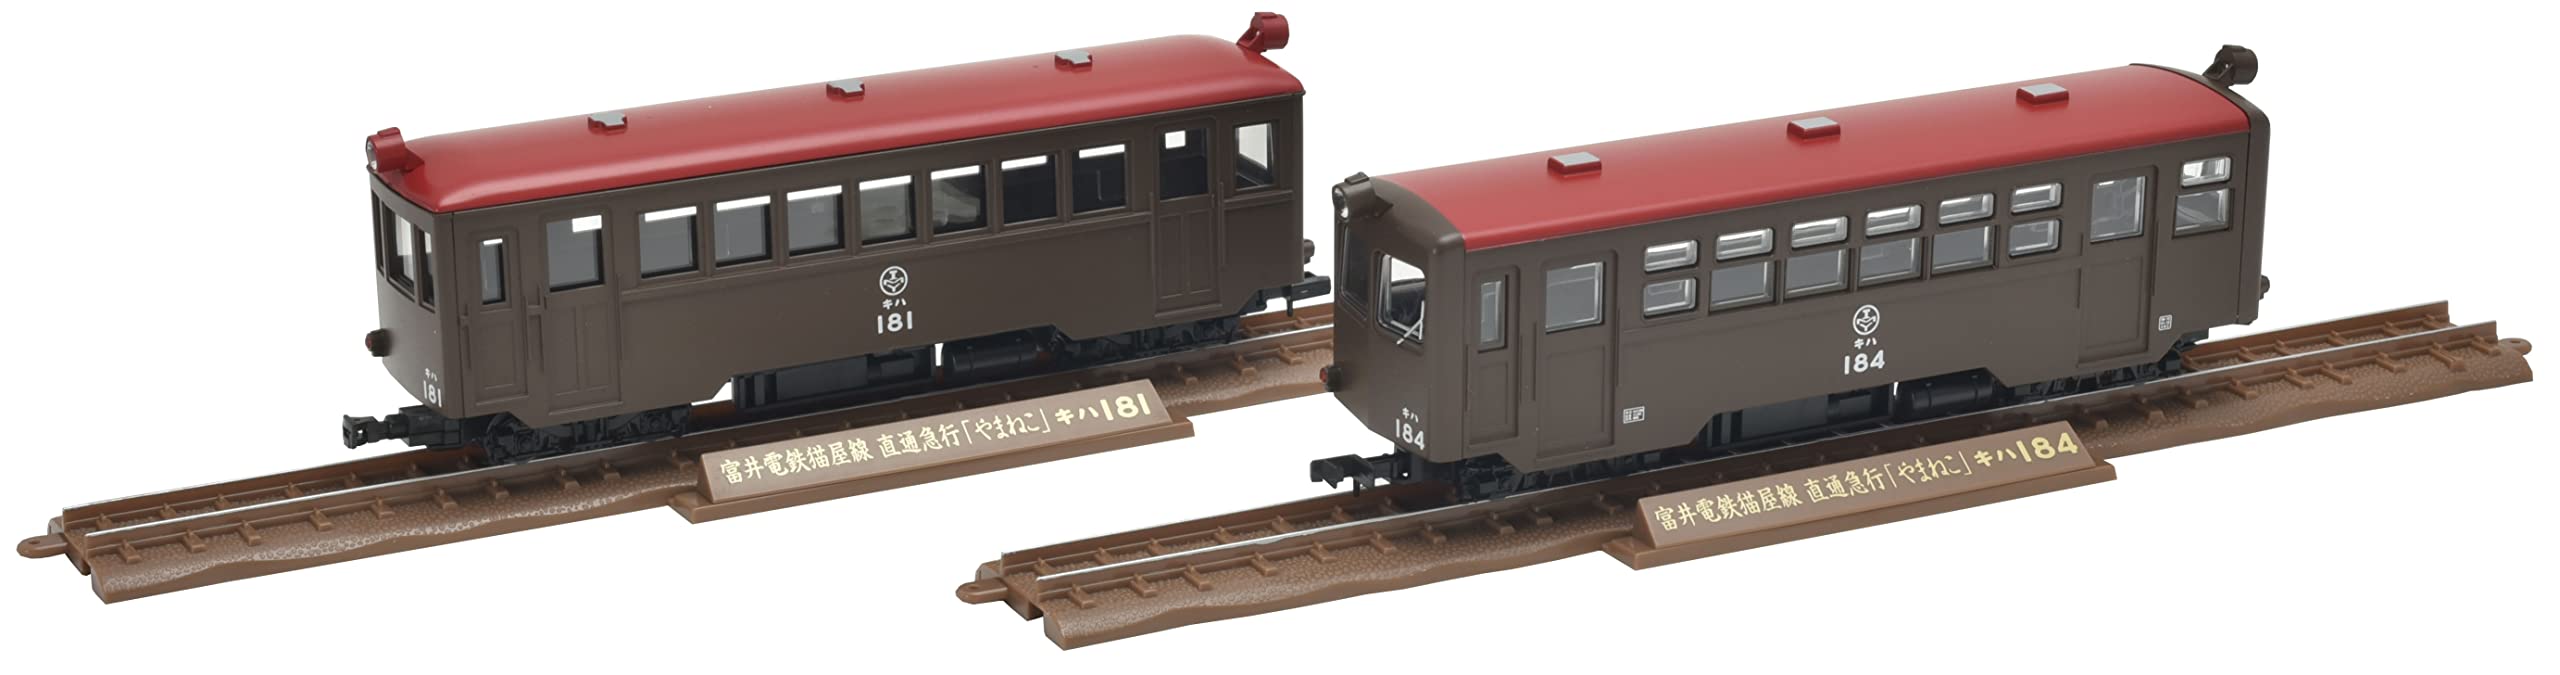 Tomytec Railway Collection Schmalspur 80 Nekoya Linie Yamaneko Kiha 181/184 2-Wagen-Set Japan 315506